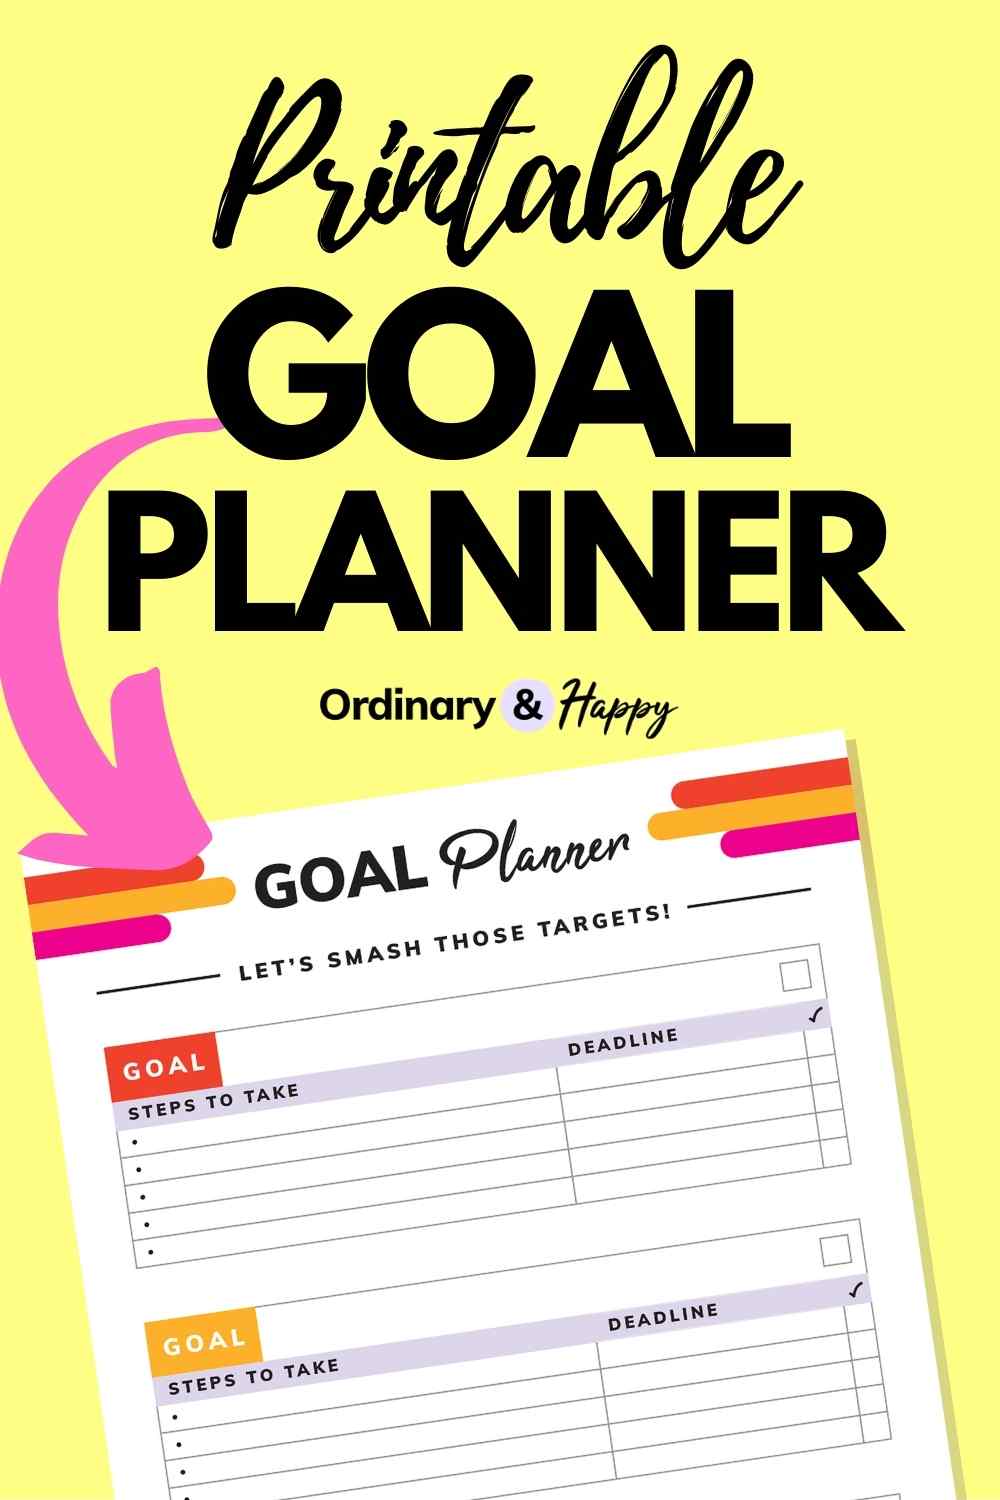 Printable Goal Planner (image pin).